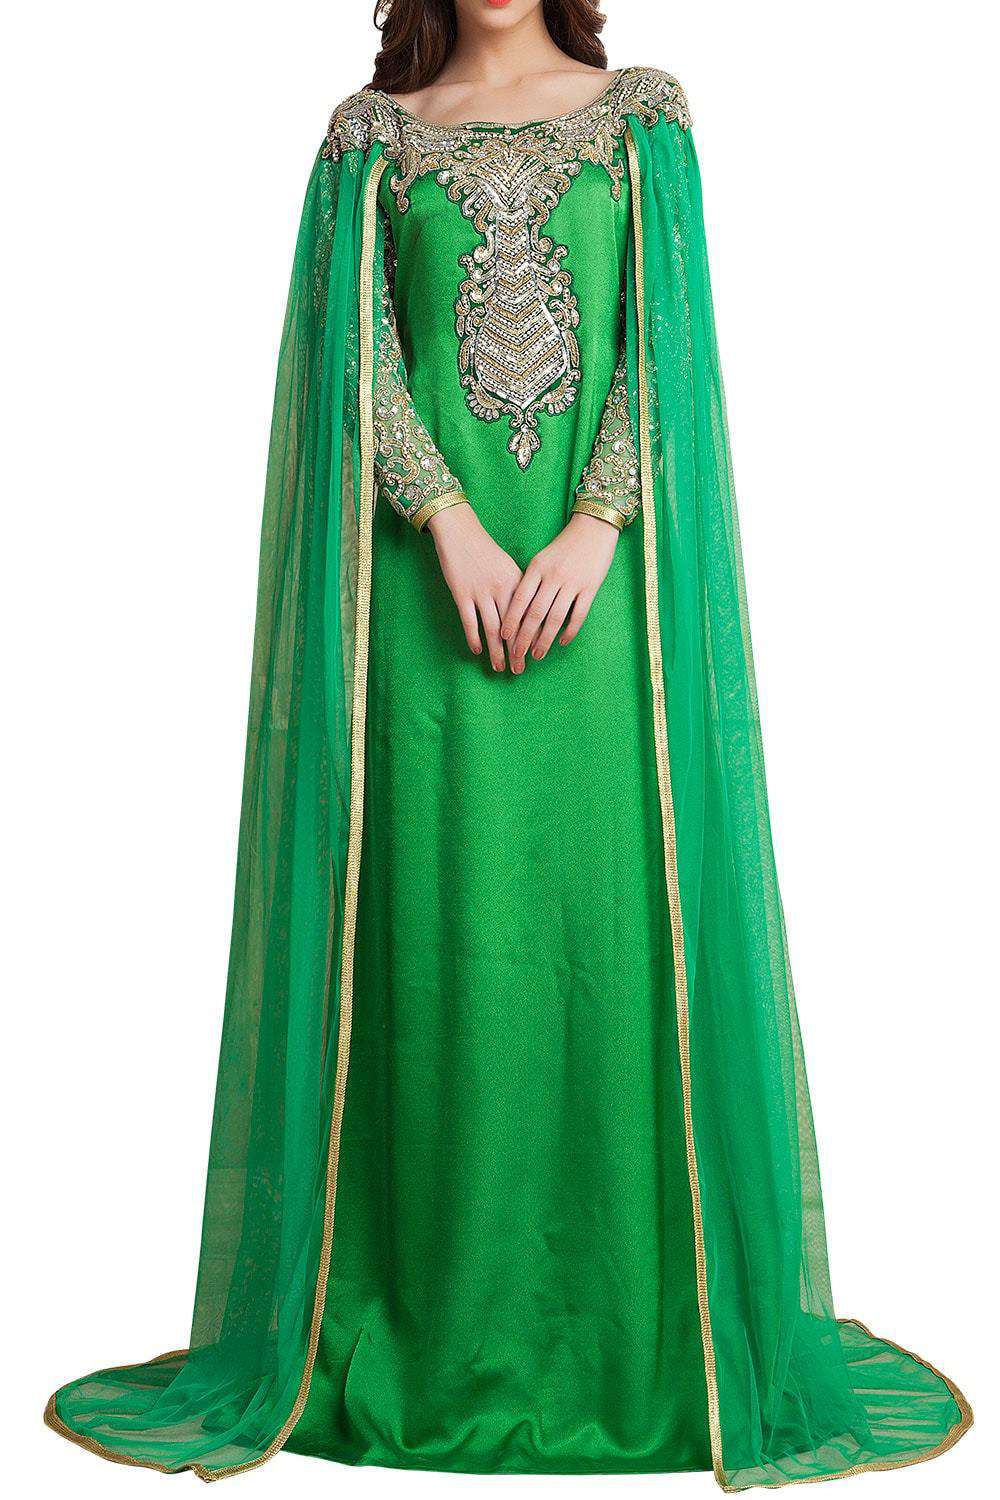 Green Color Designer Handmade Arabic Long Sleeve Wedding Islamic Dress